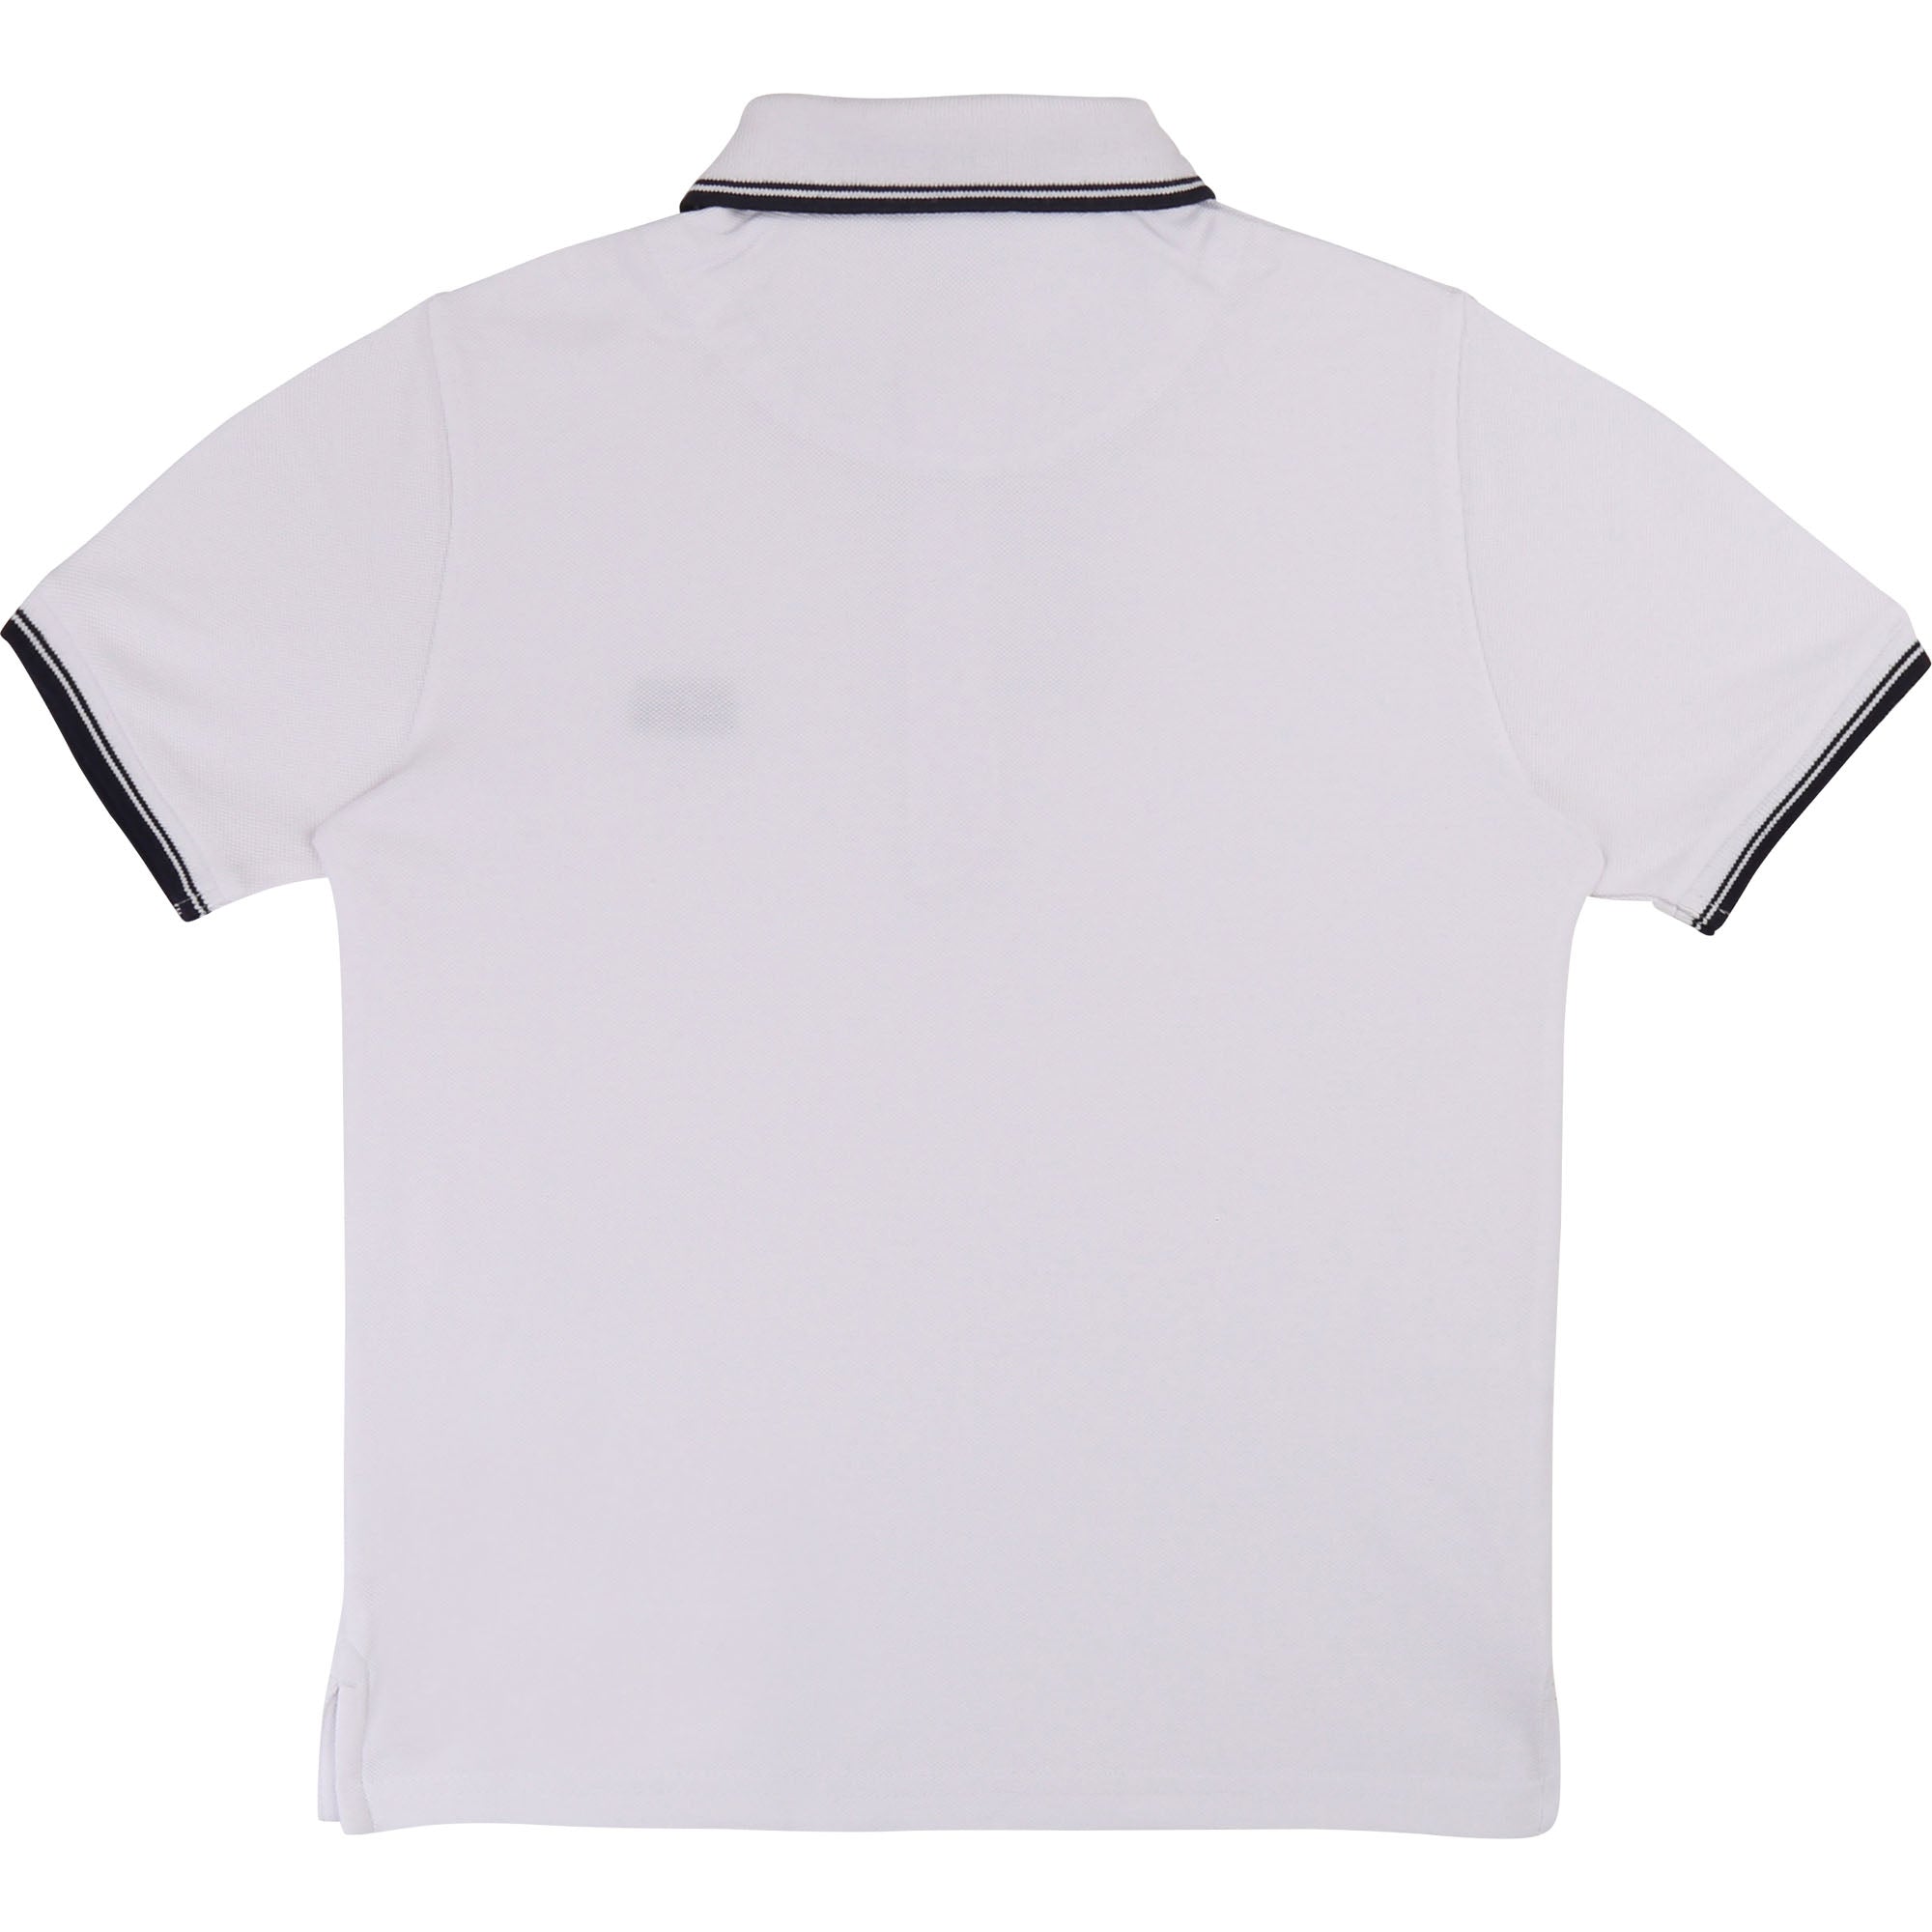 Boys White Polo Cotton Shirt